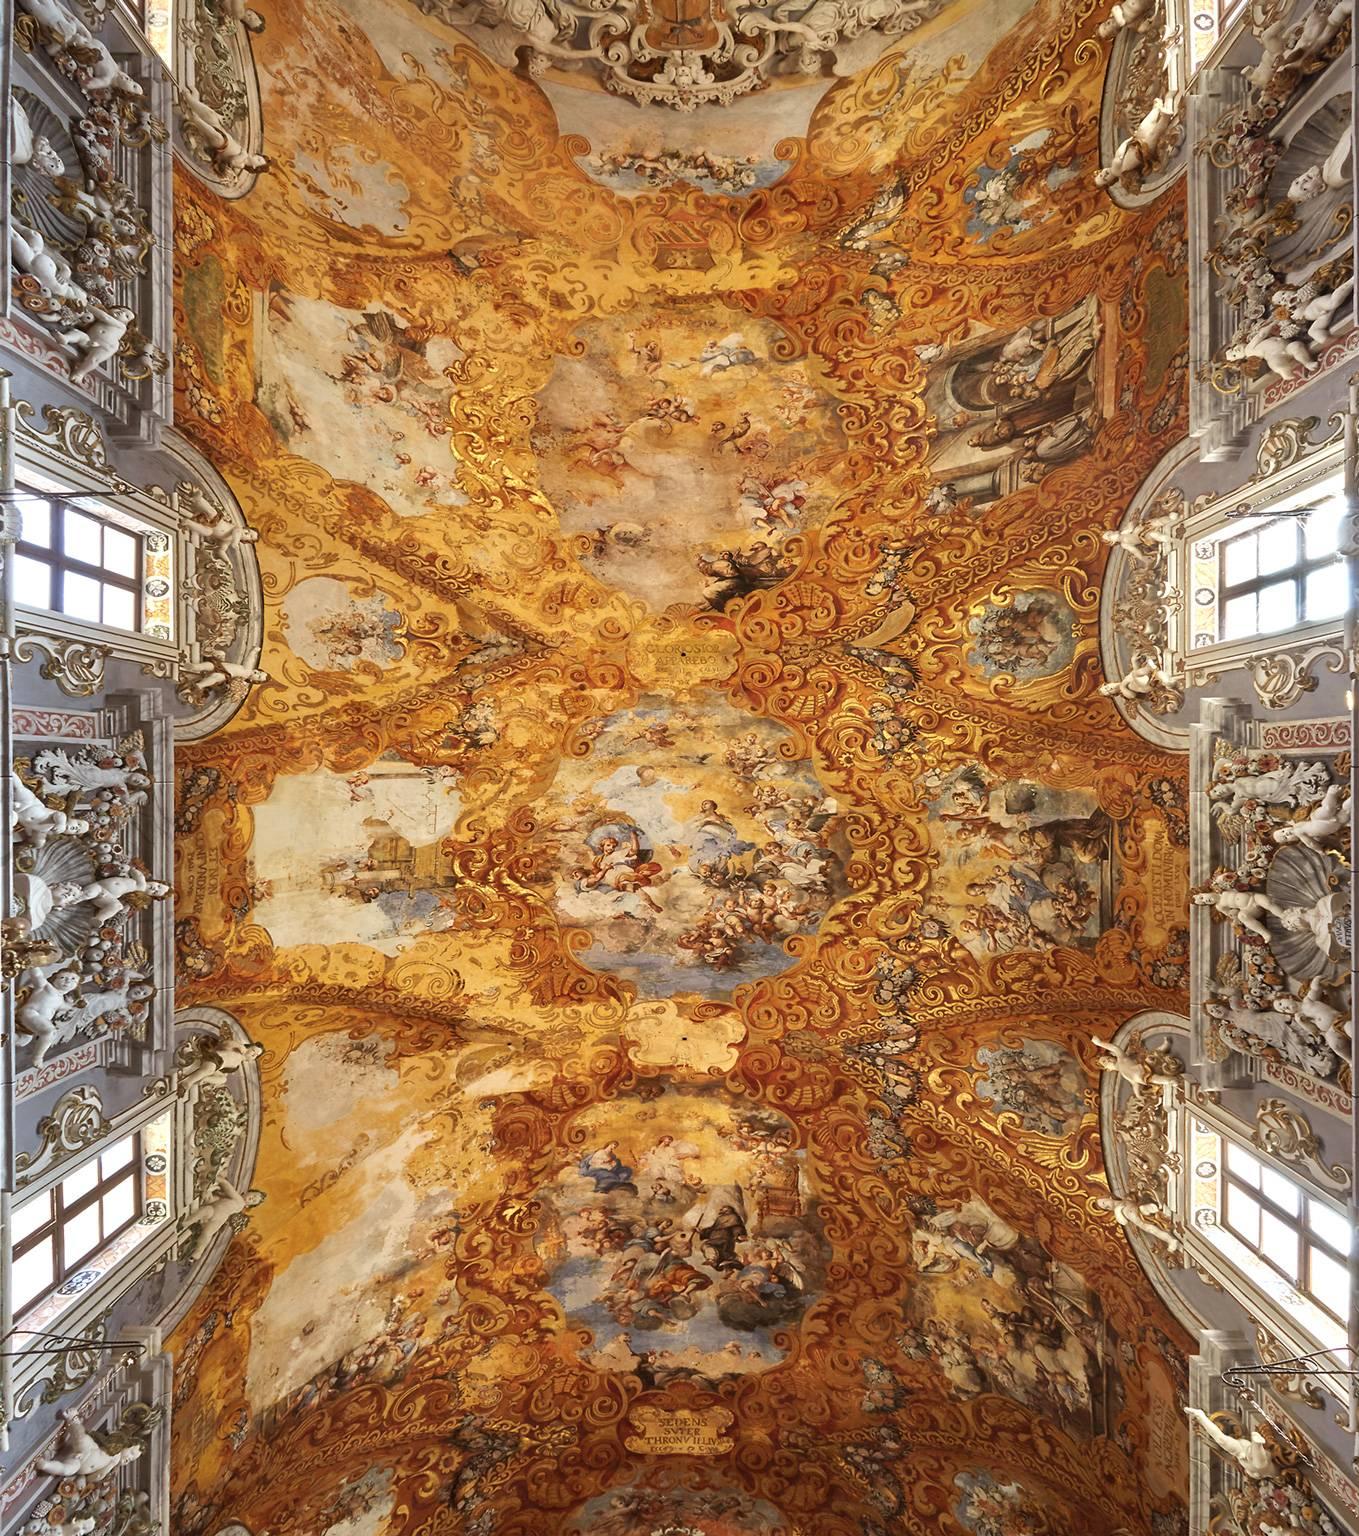 Frank Schott Color Photograph - Hallelujah - large format photograph of baroque Italian palazzo fresco ceiling